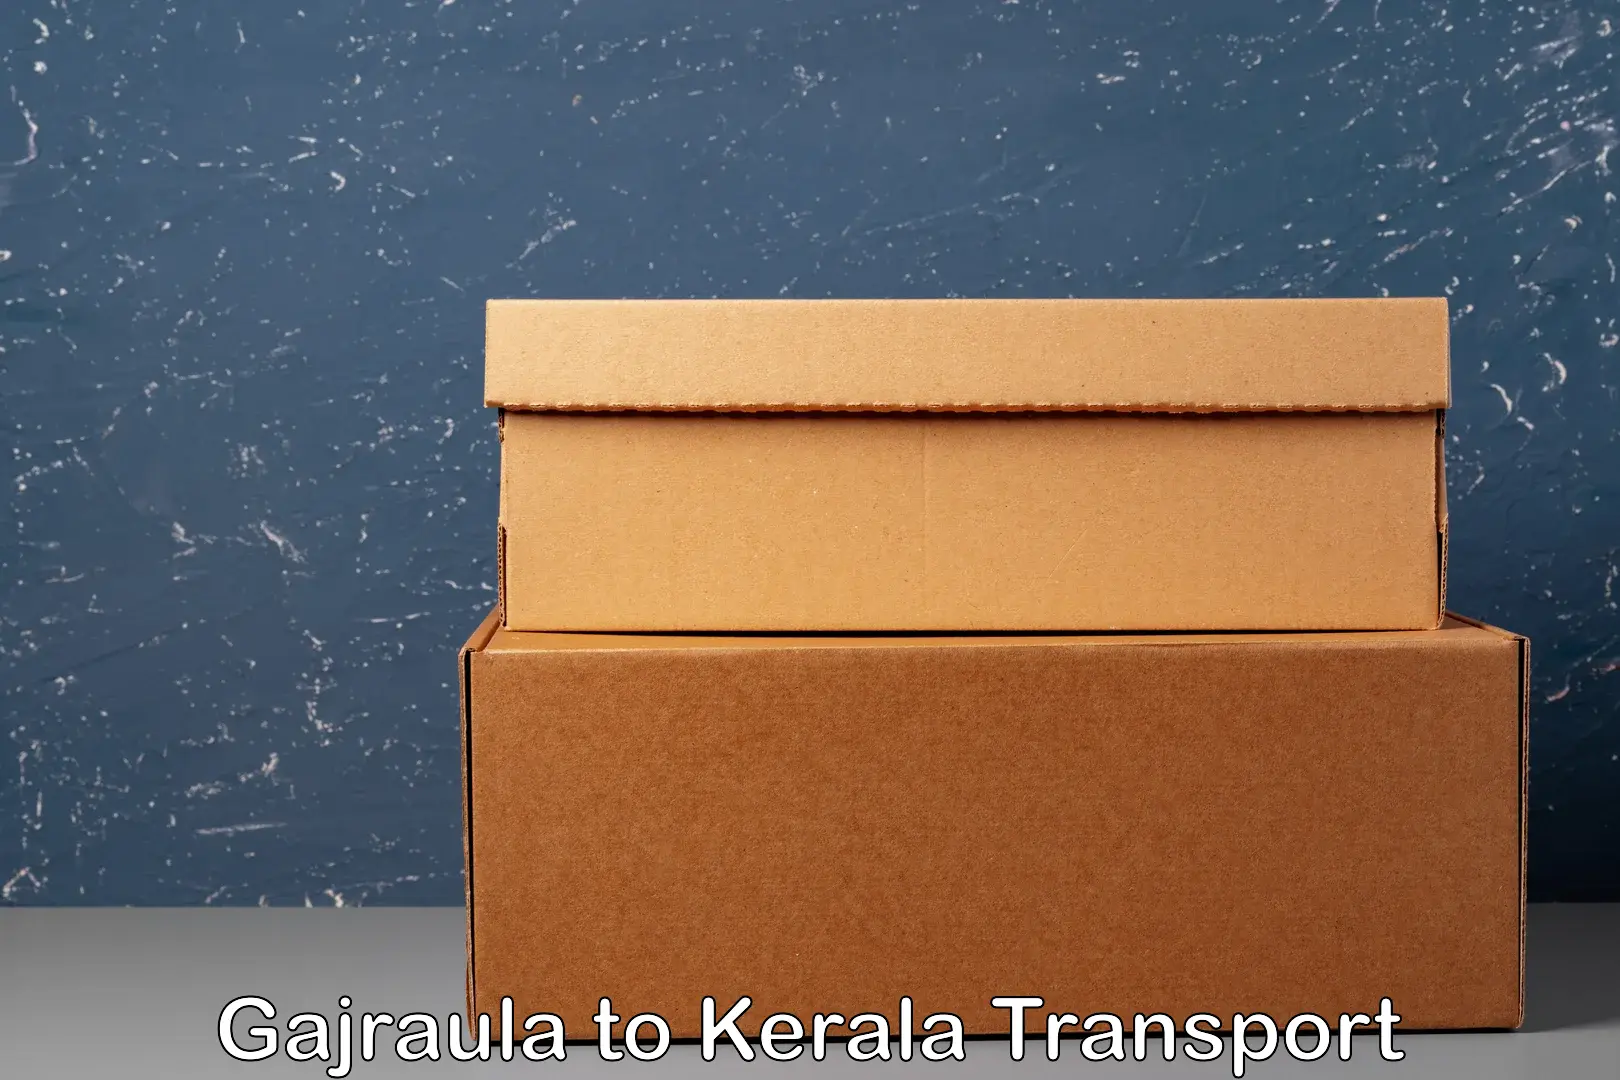 Online transport service Gajraula to Palakkad